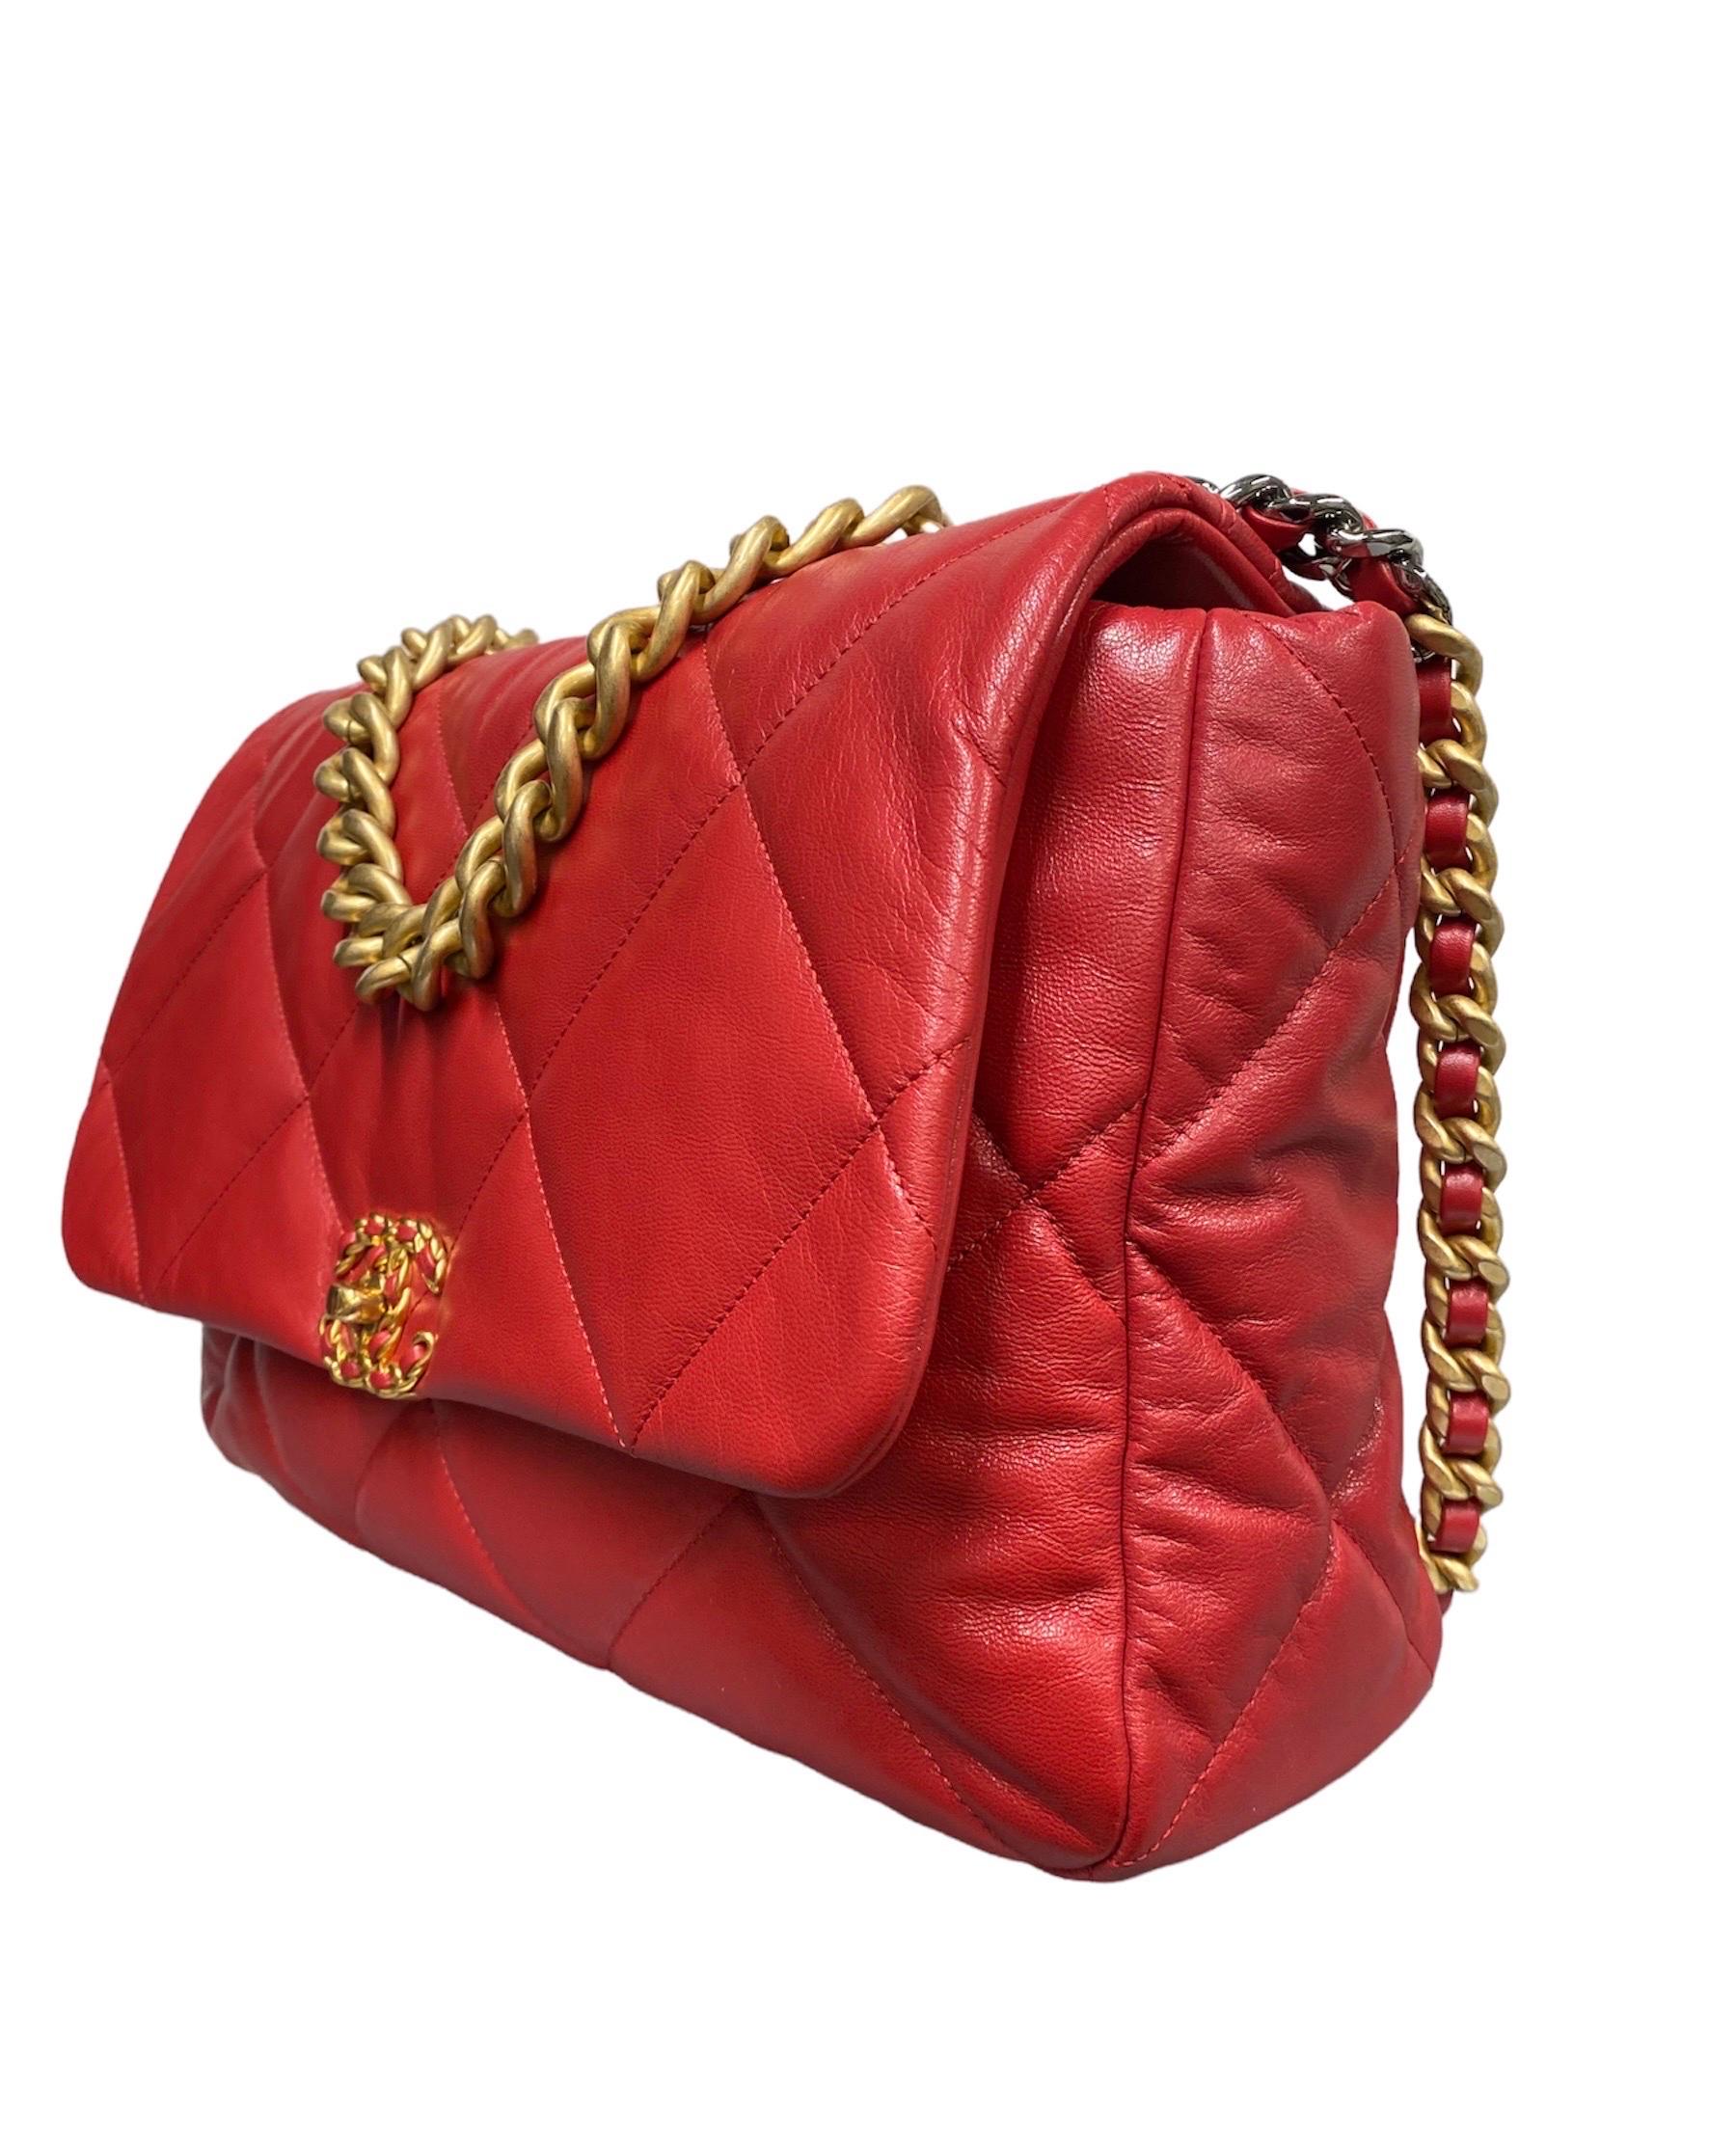 chanel red handbag 2019